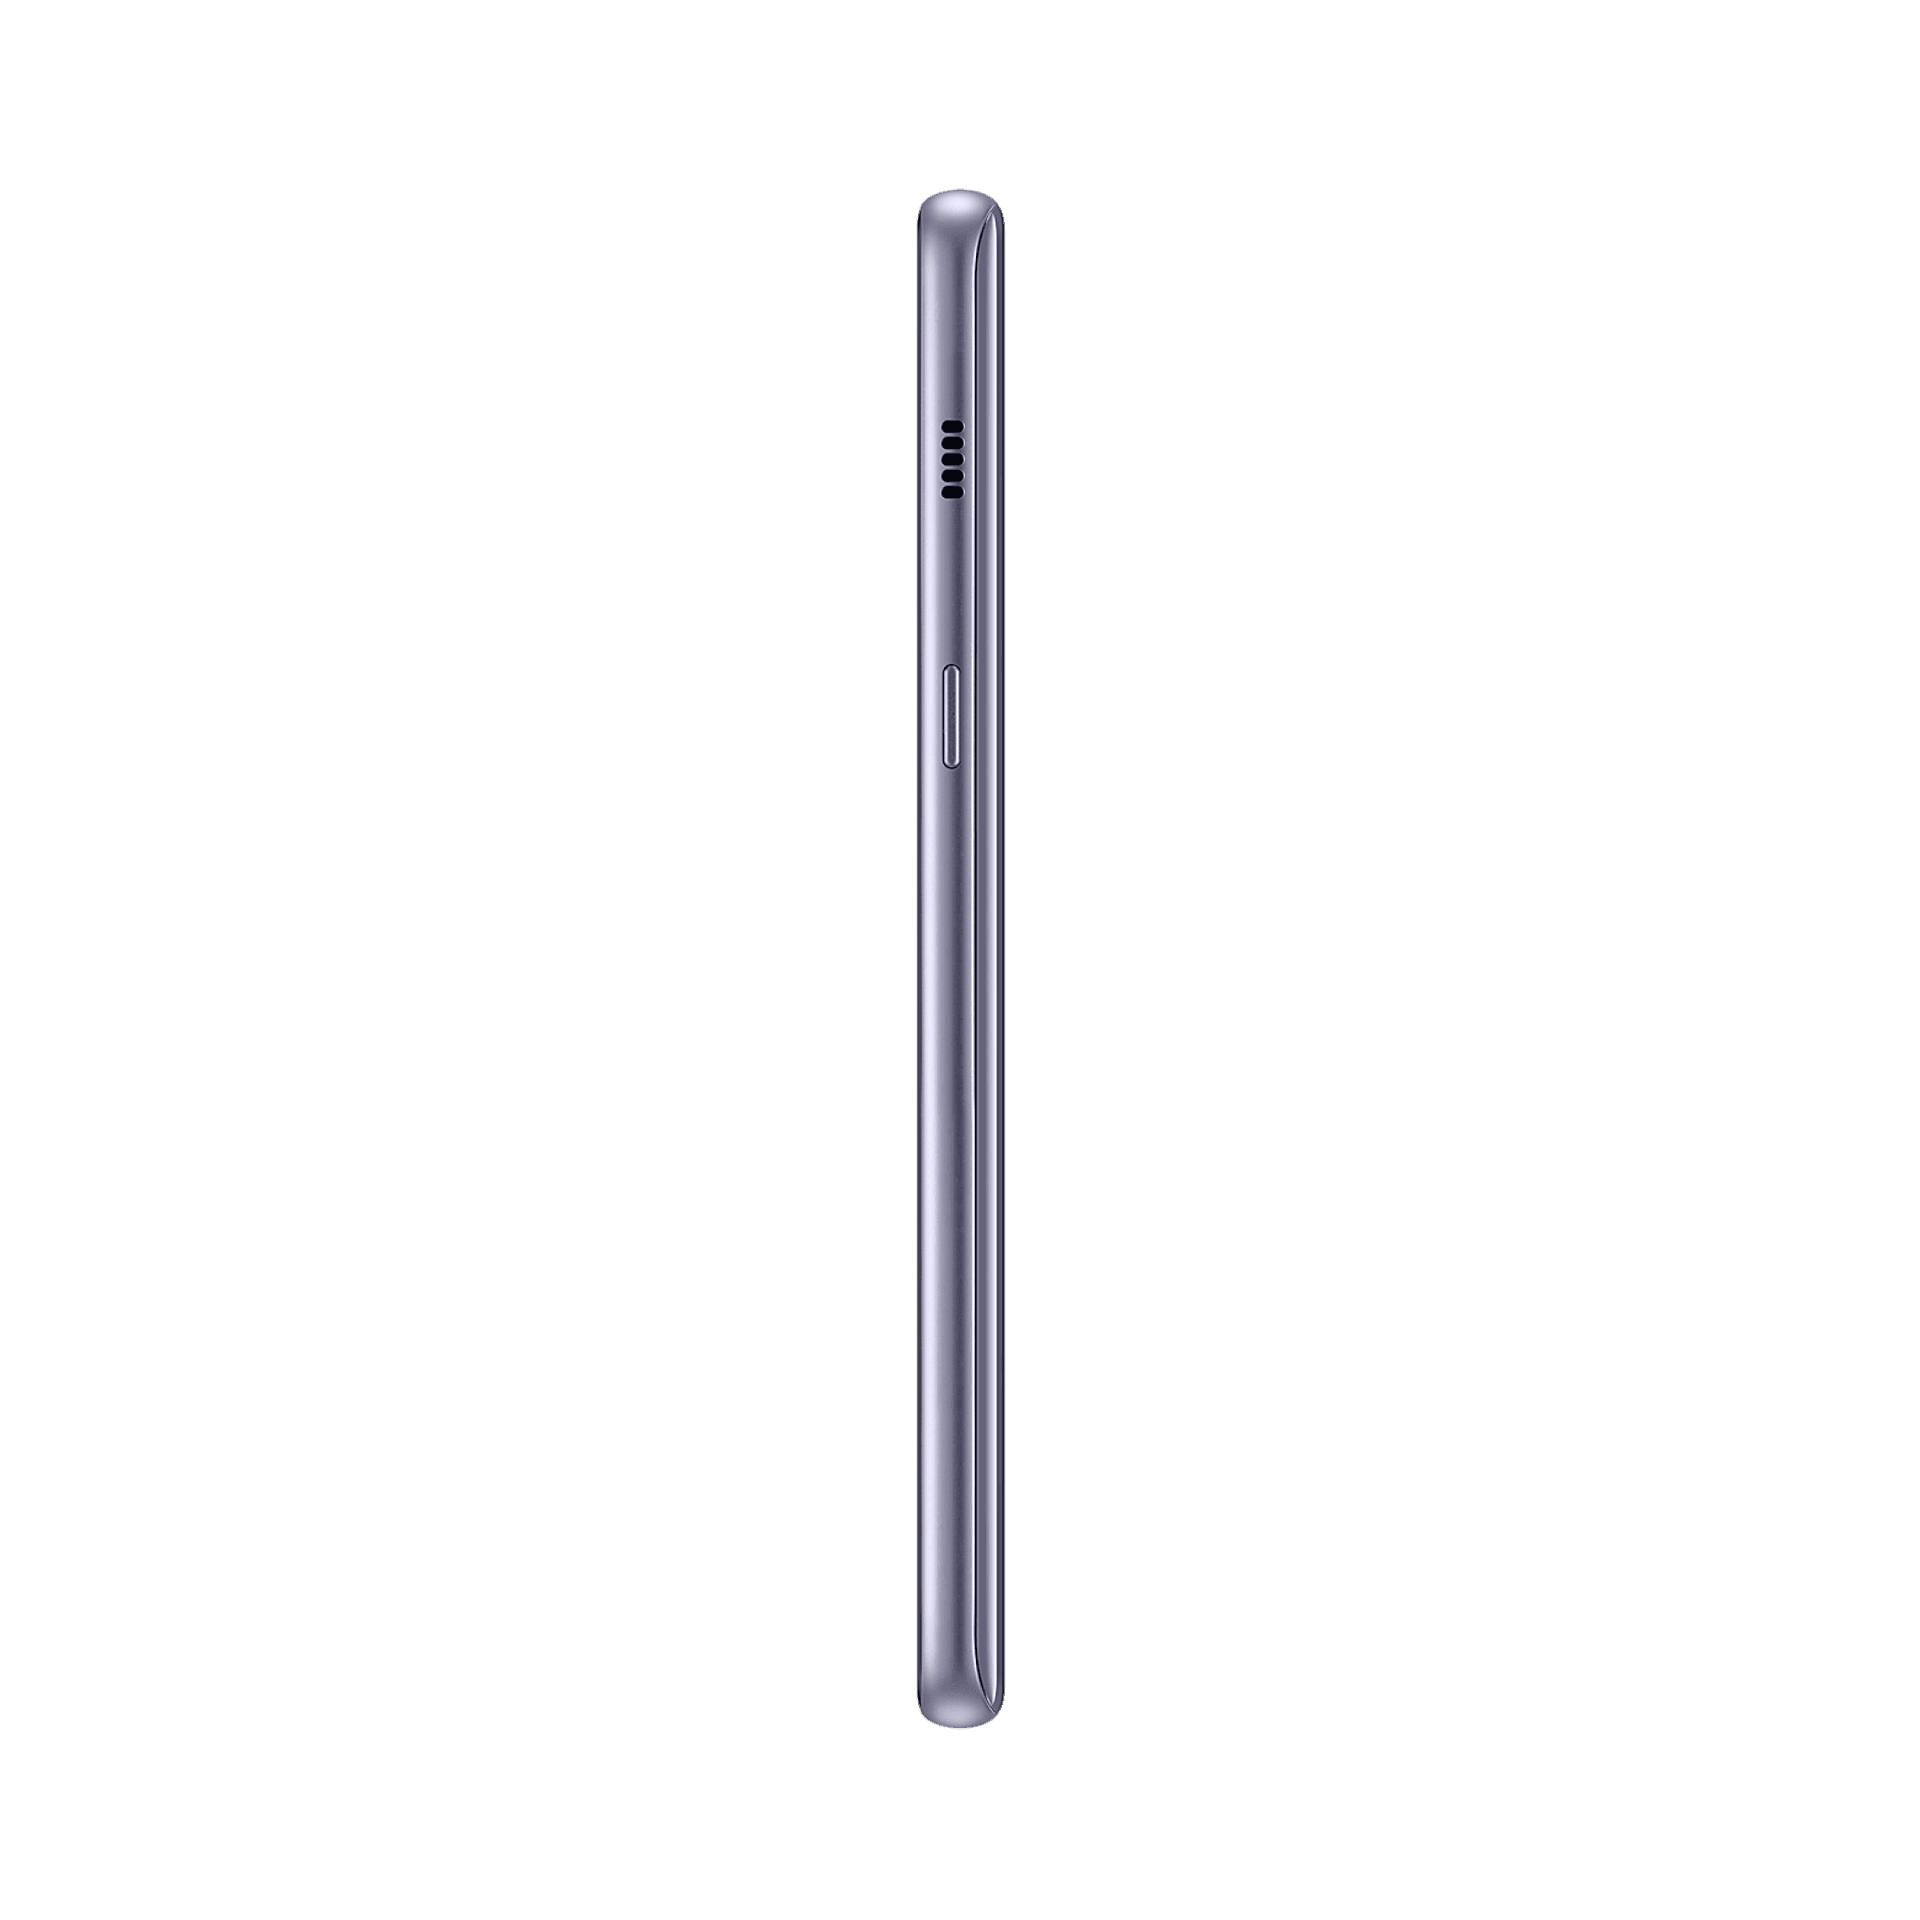 Samsung Galaxy A8 Plus - 64 GB - Orkide Grisi